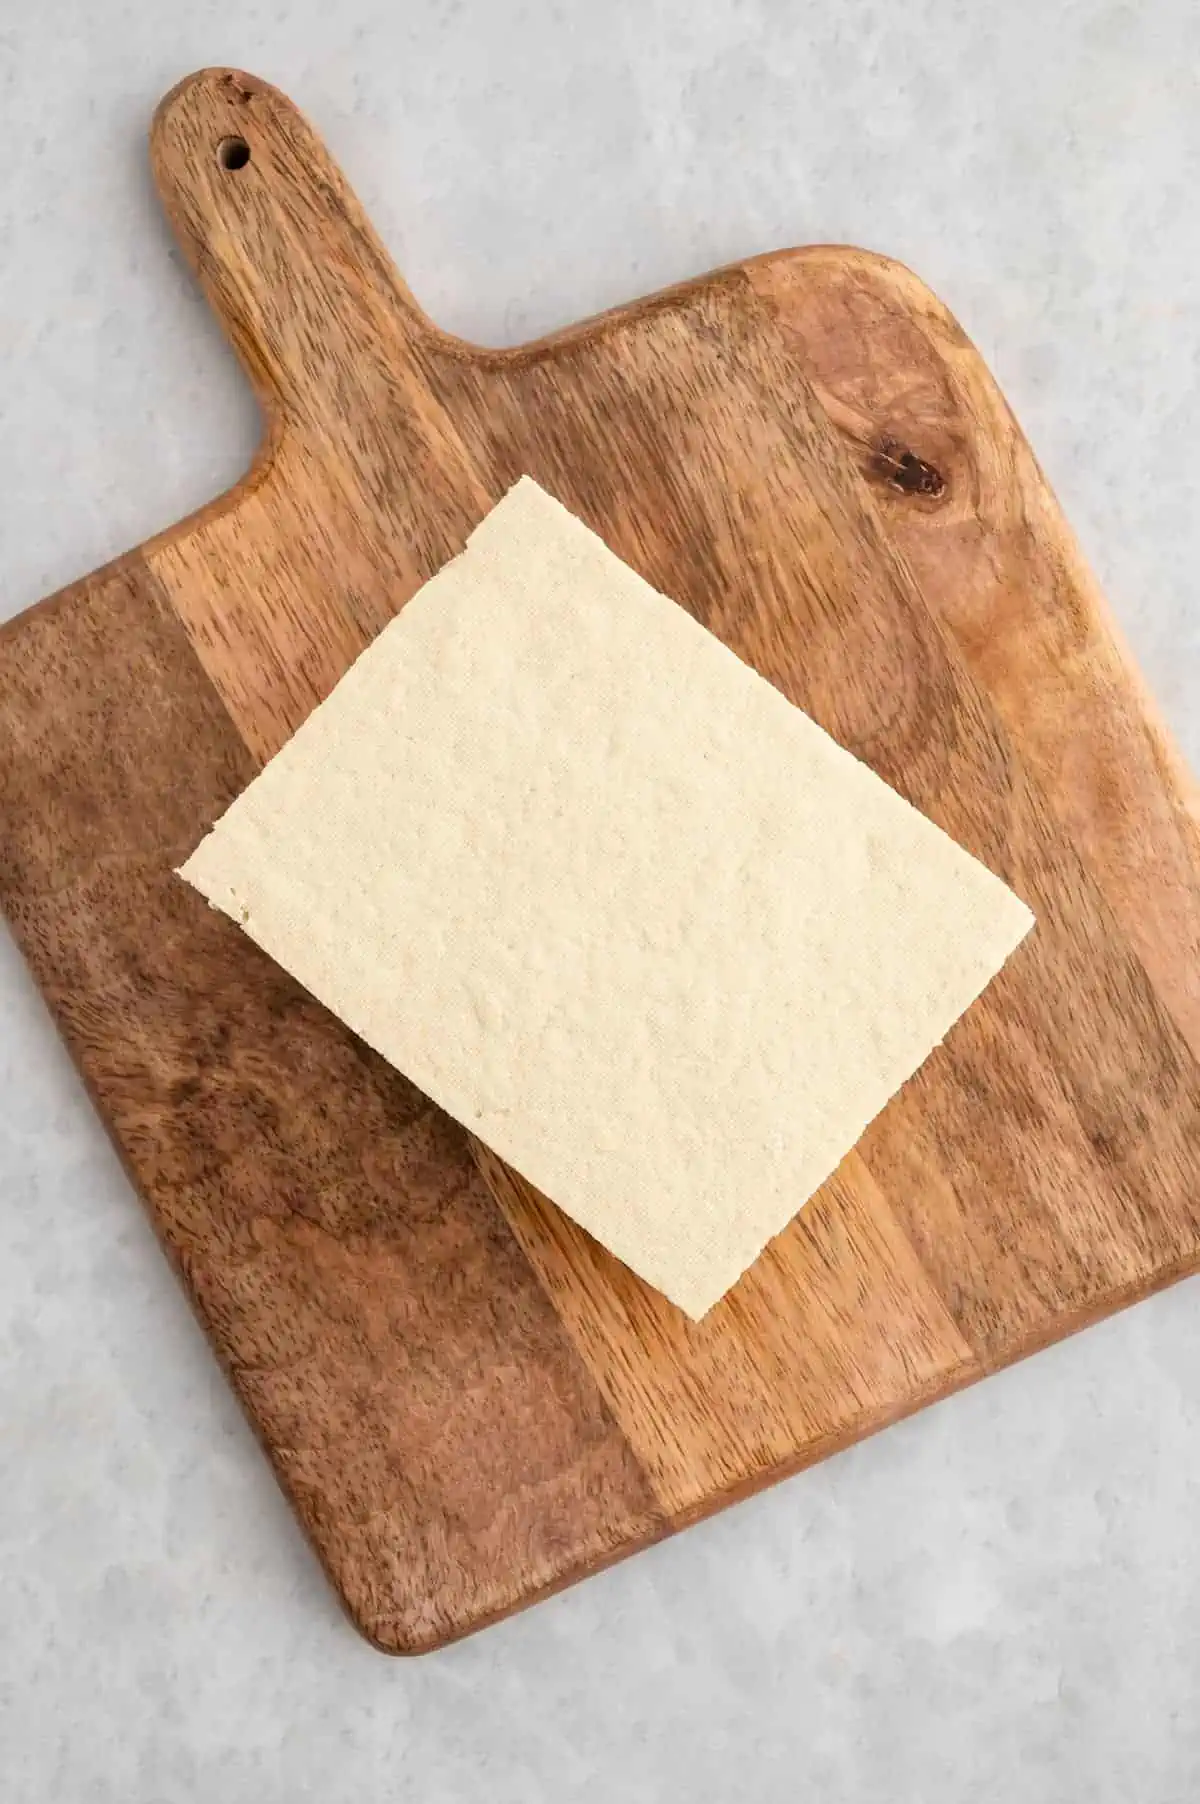 A block of extra tofu on a cutting board.